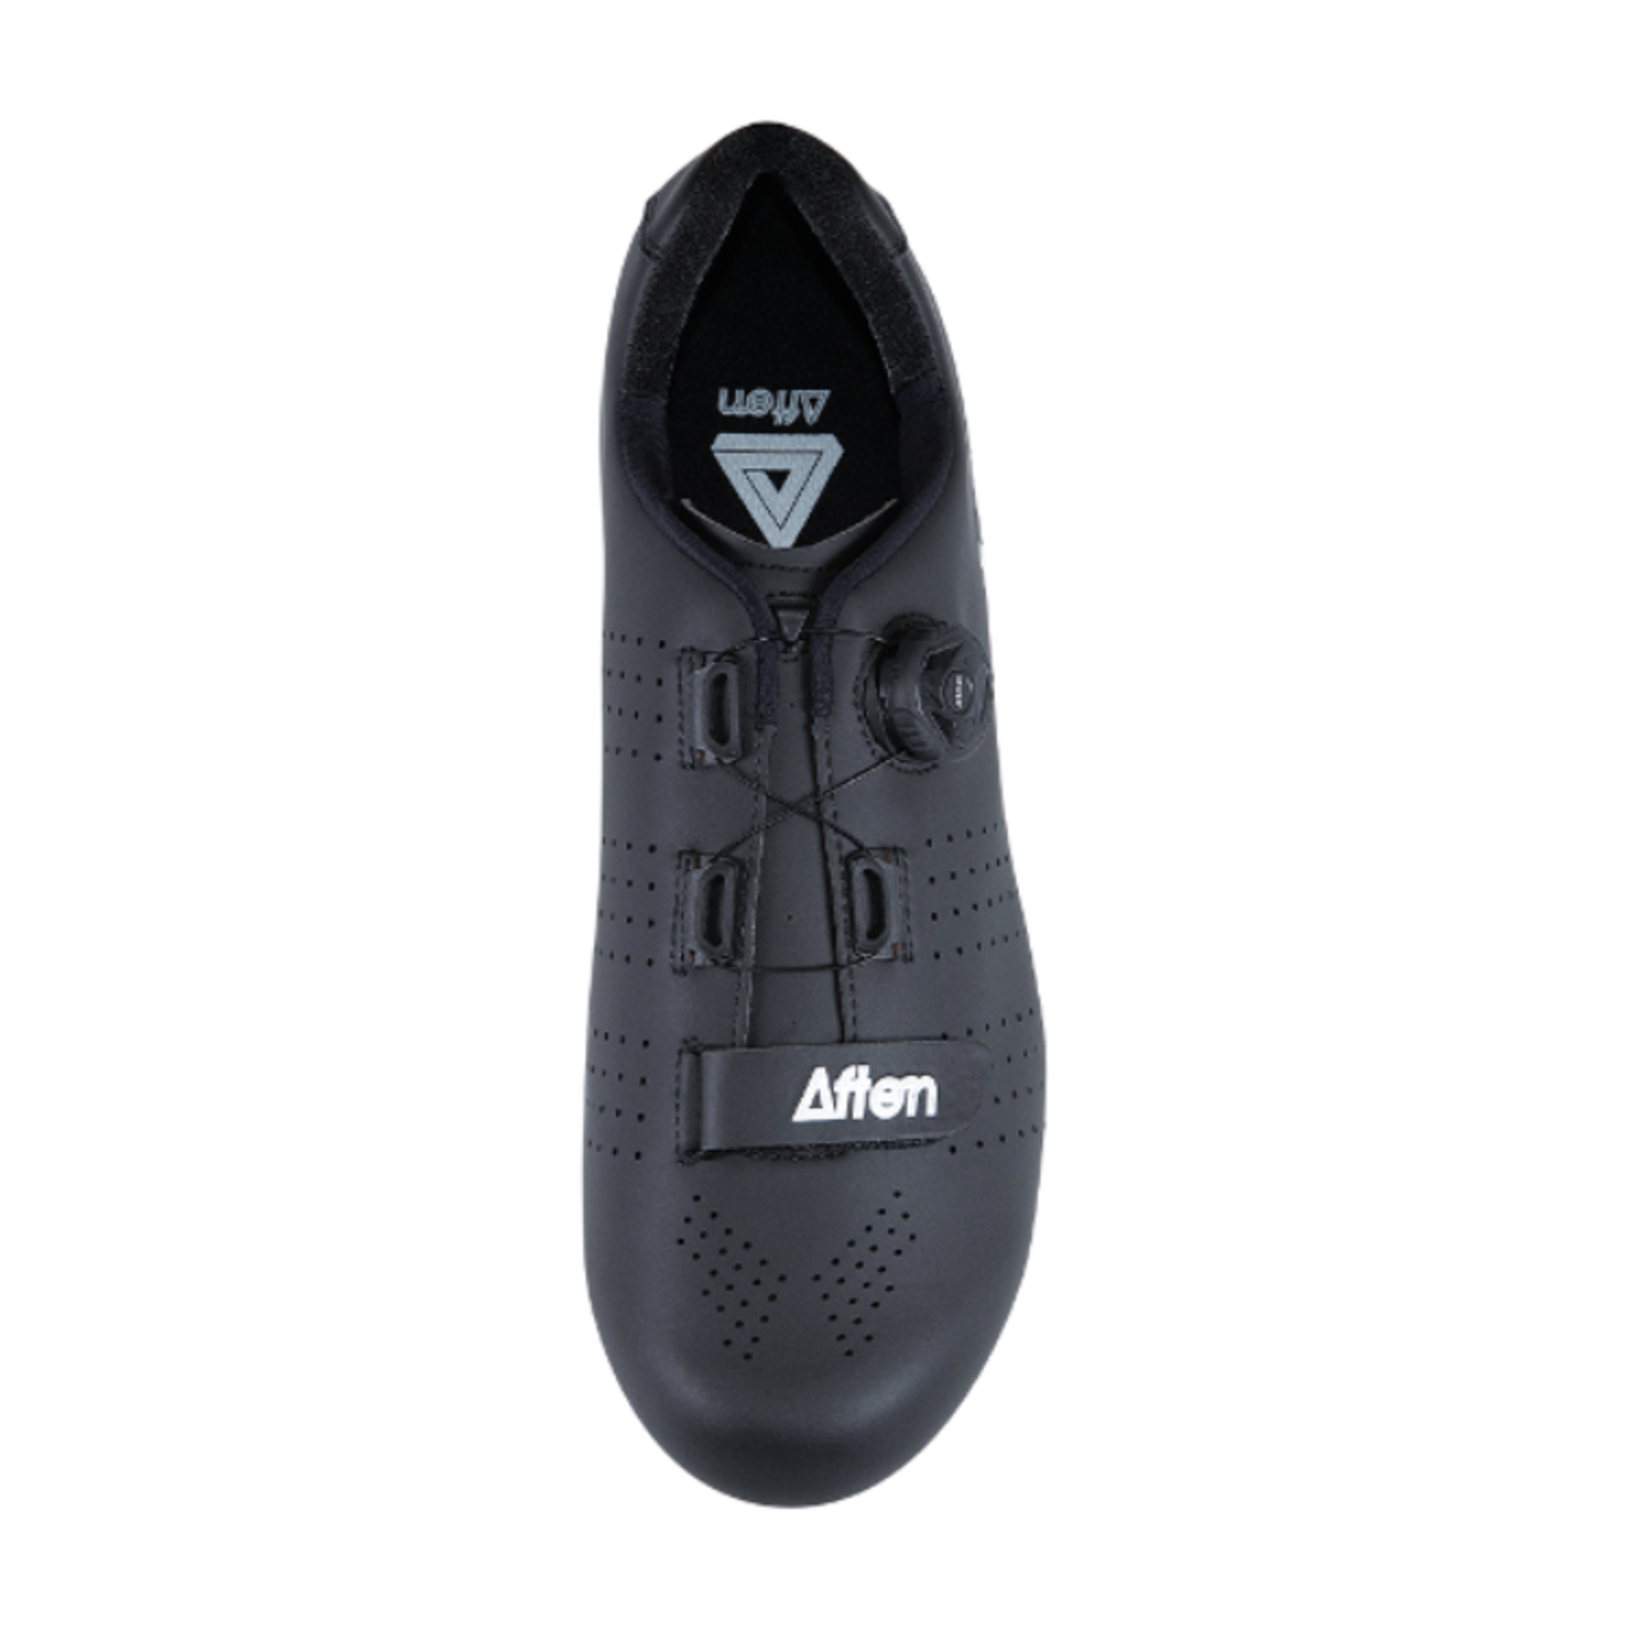 AFTON Gravel Shoes - ROYCE - Black/White, Size 45